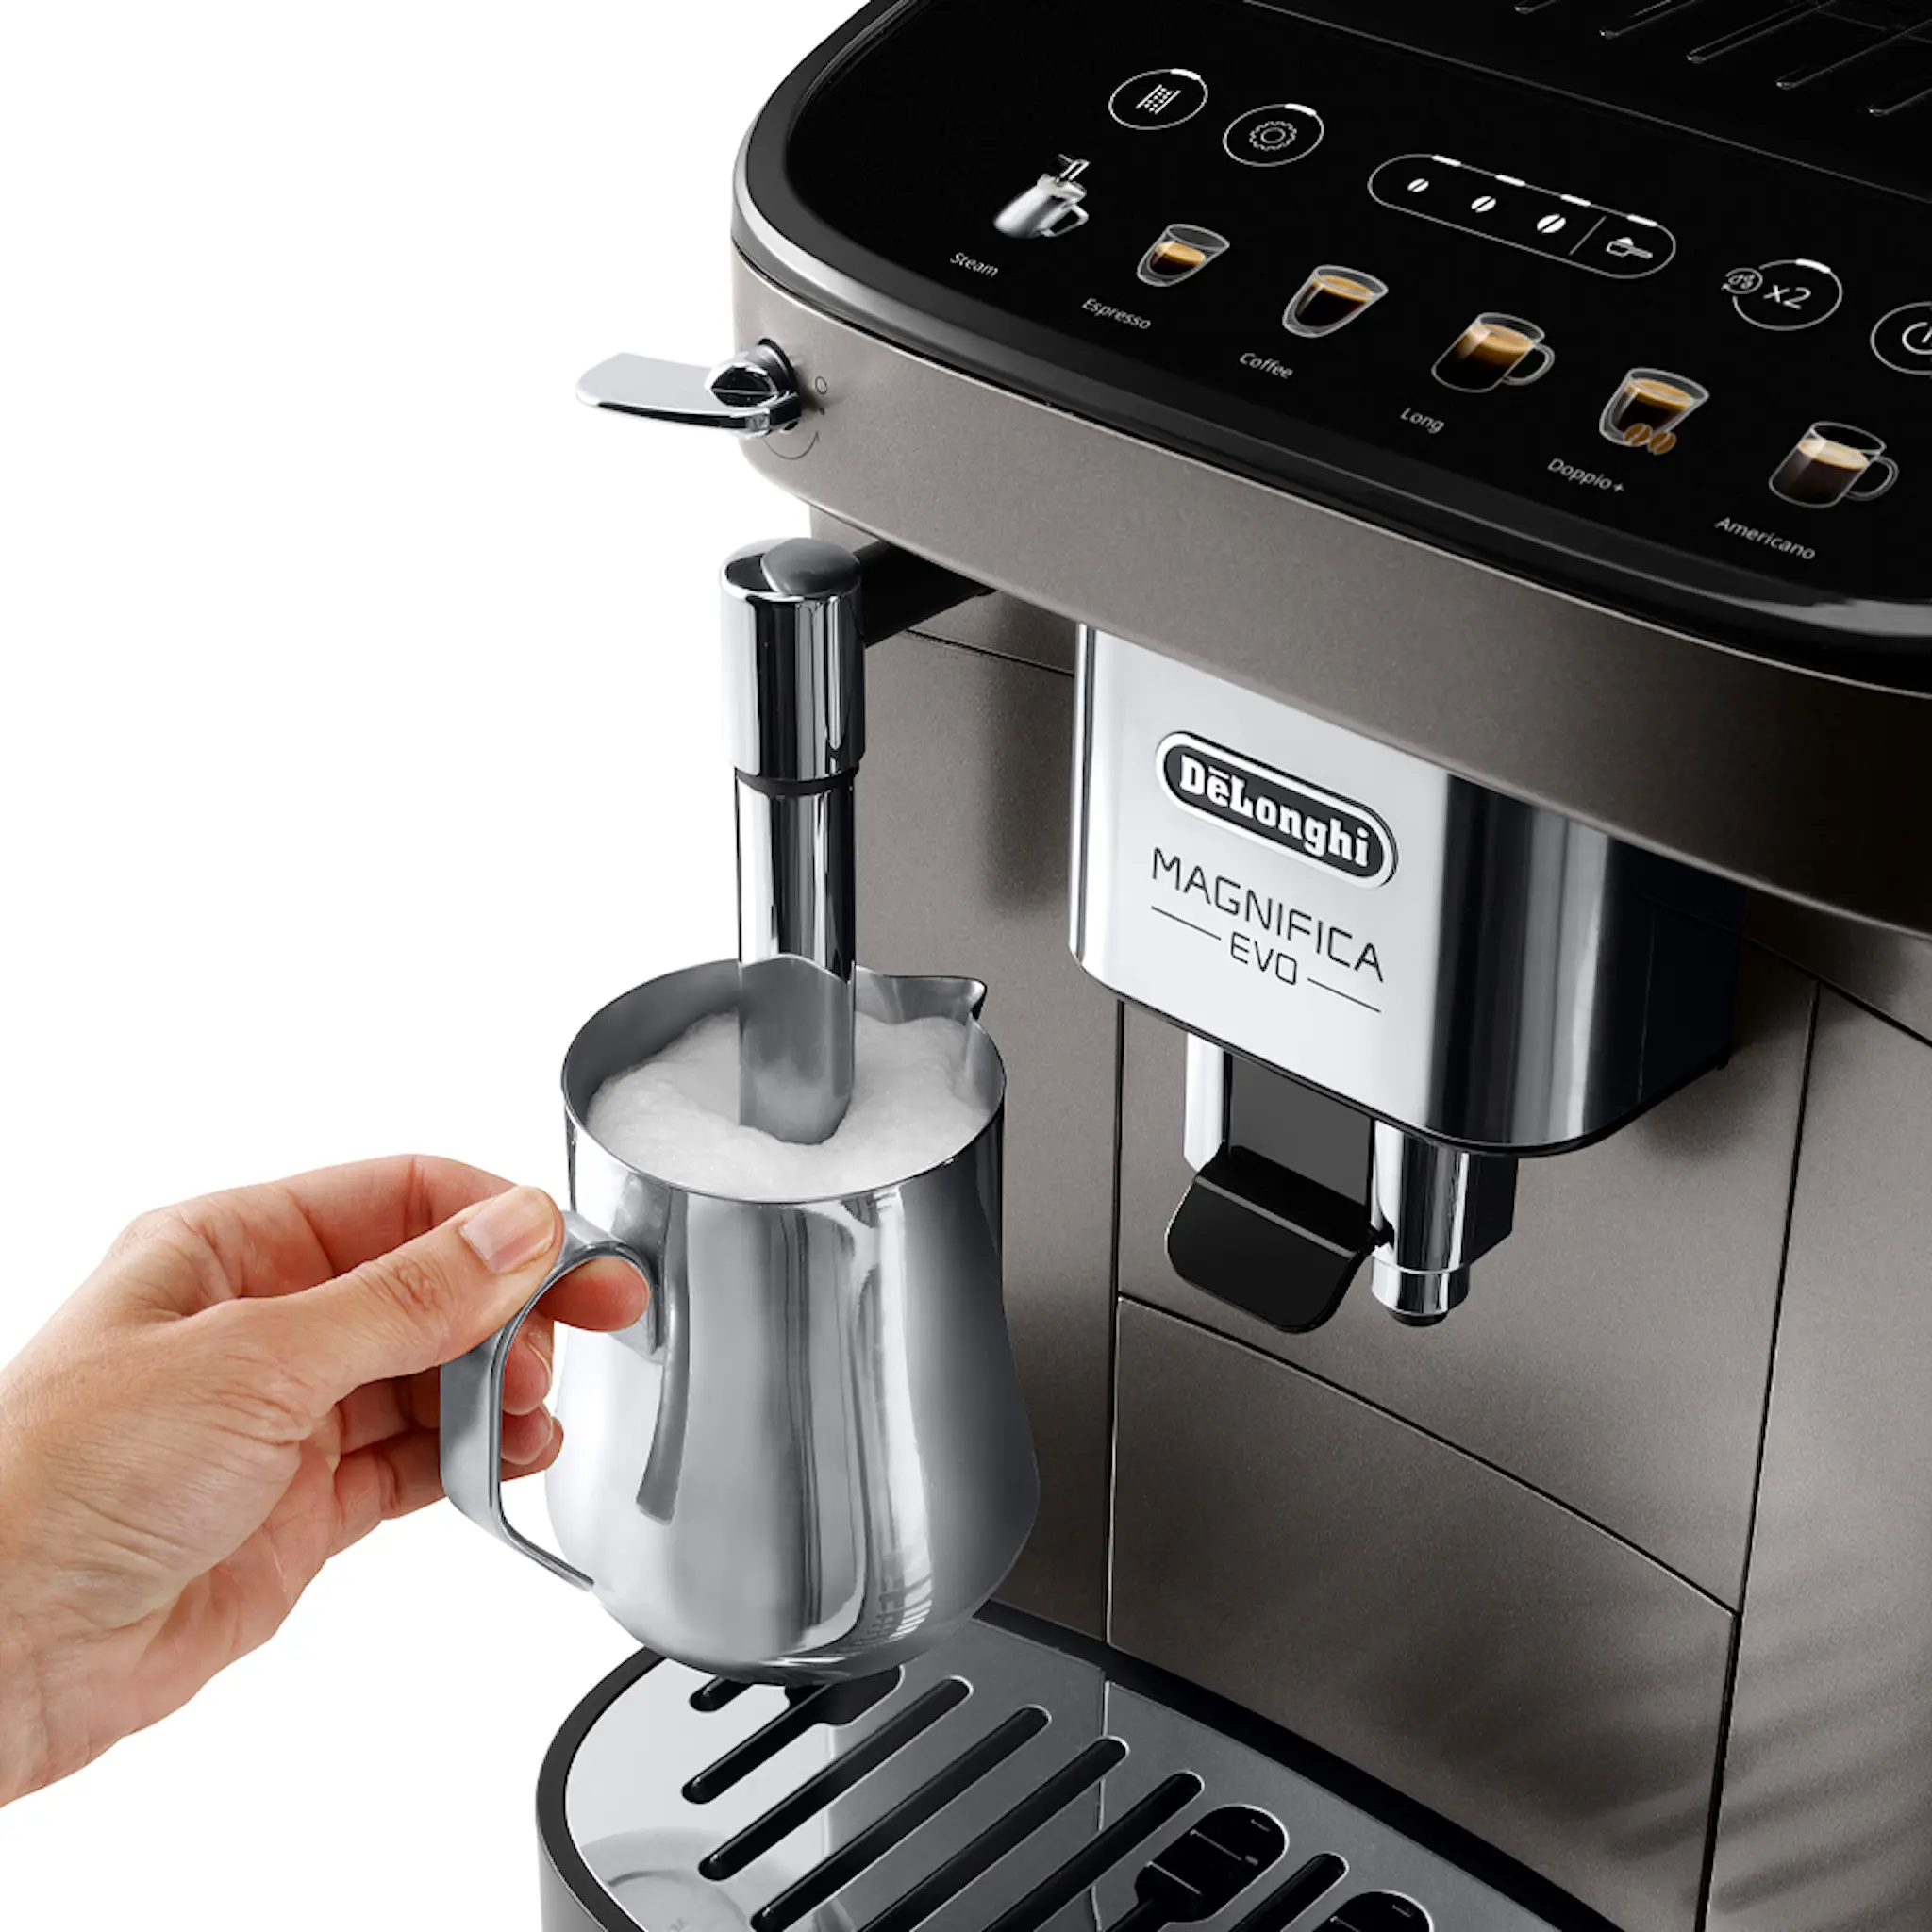 De'Longhi Magnifica Evo kaffemaskin ECAM290.42TB automatisk